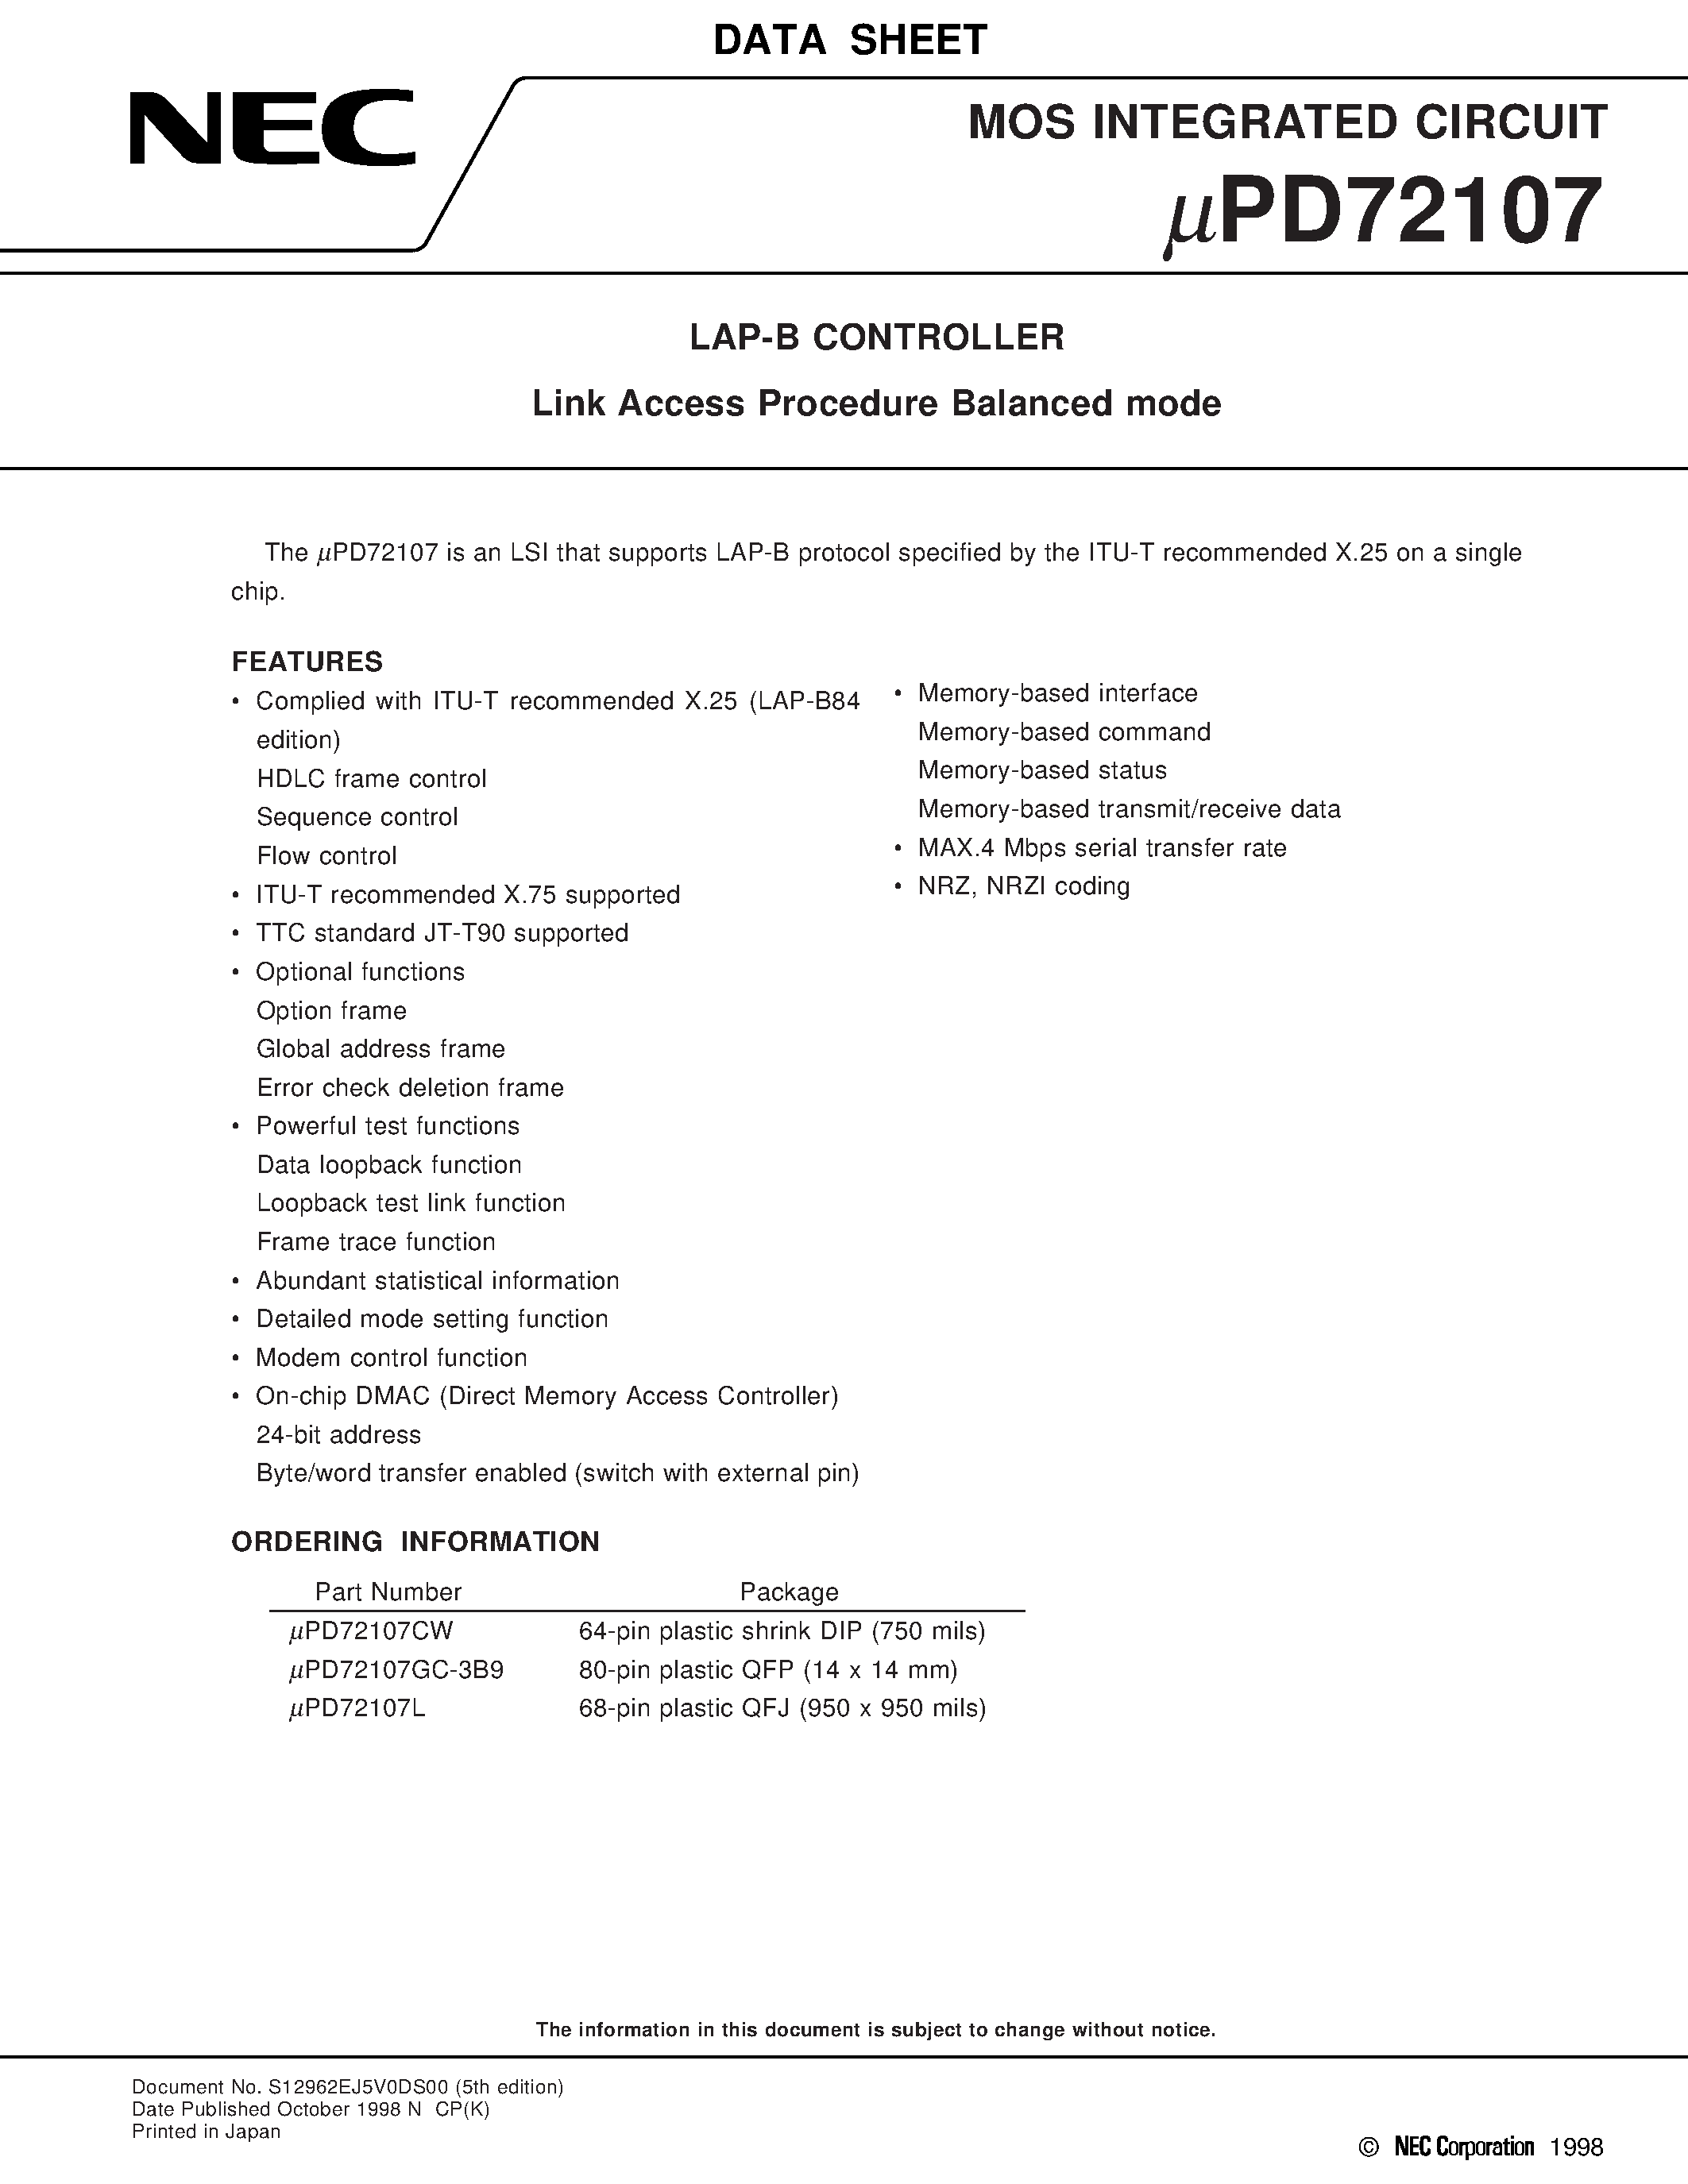 Даташит UPD72107 - LAP-B CONTROLLER(Link Access Procedure Balanced mode) страница 1